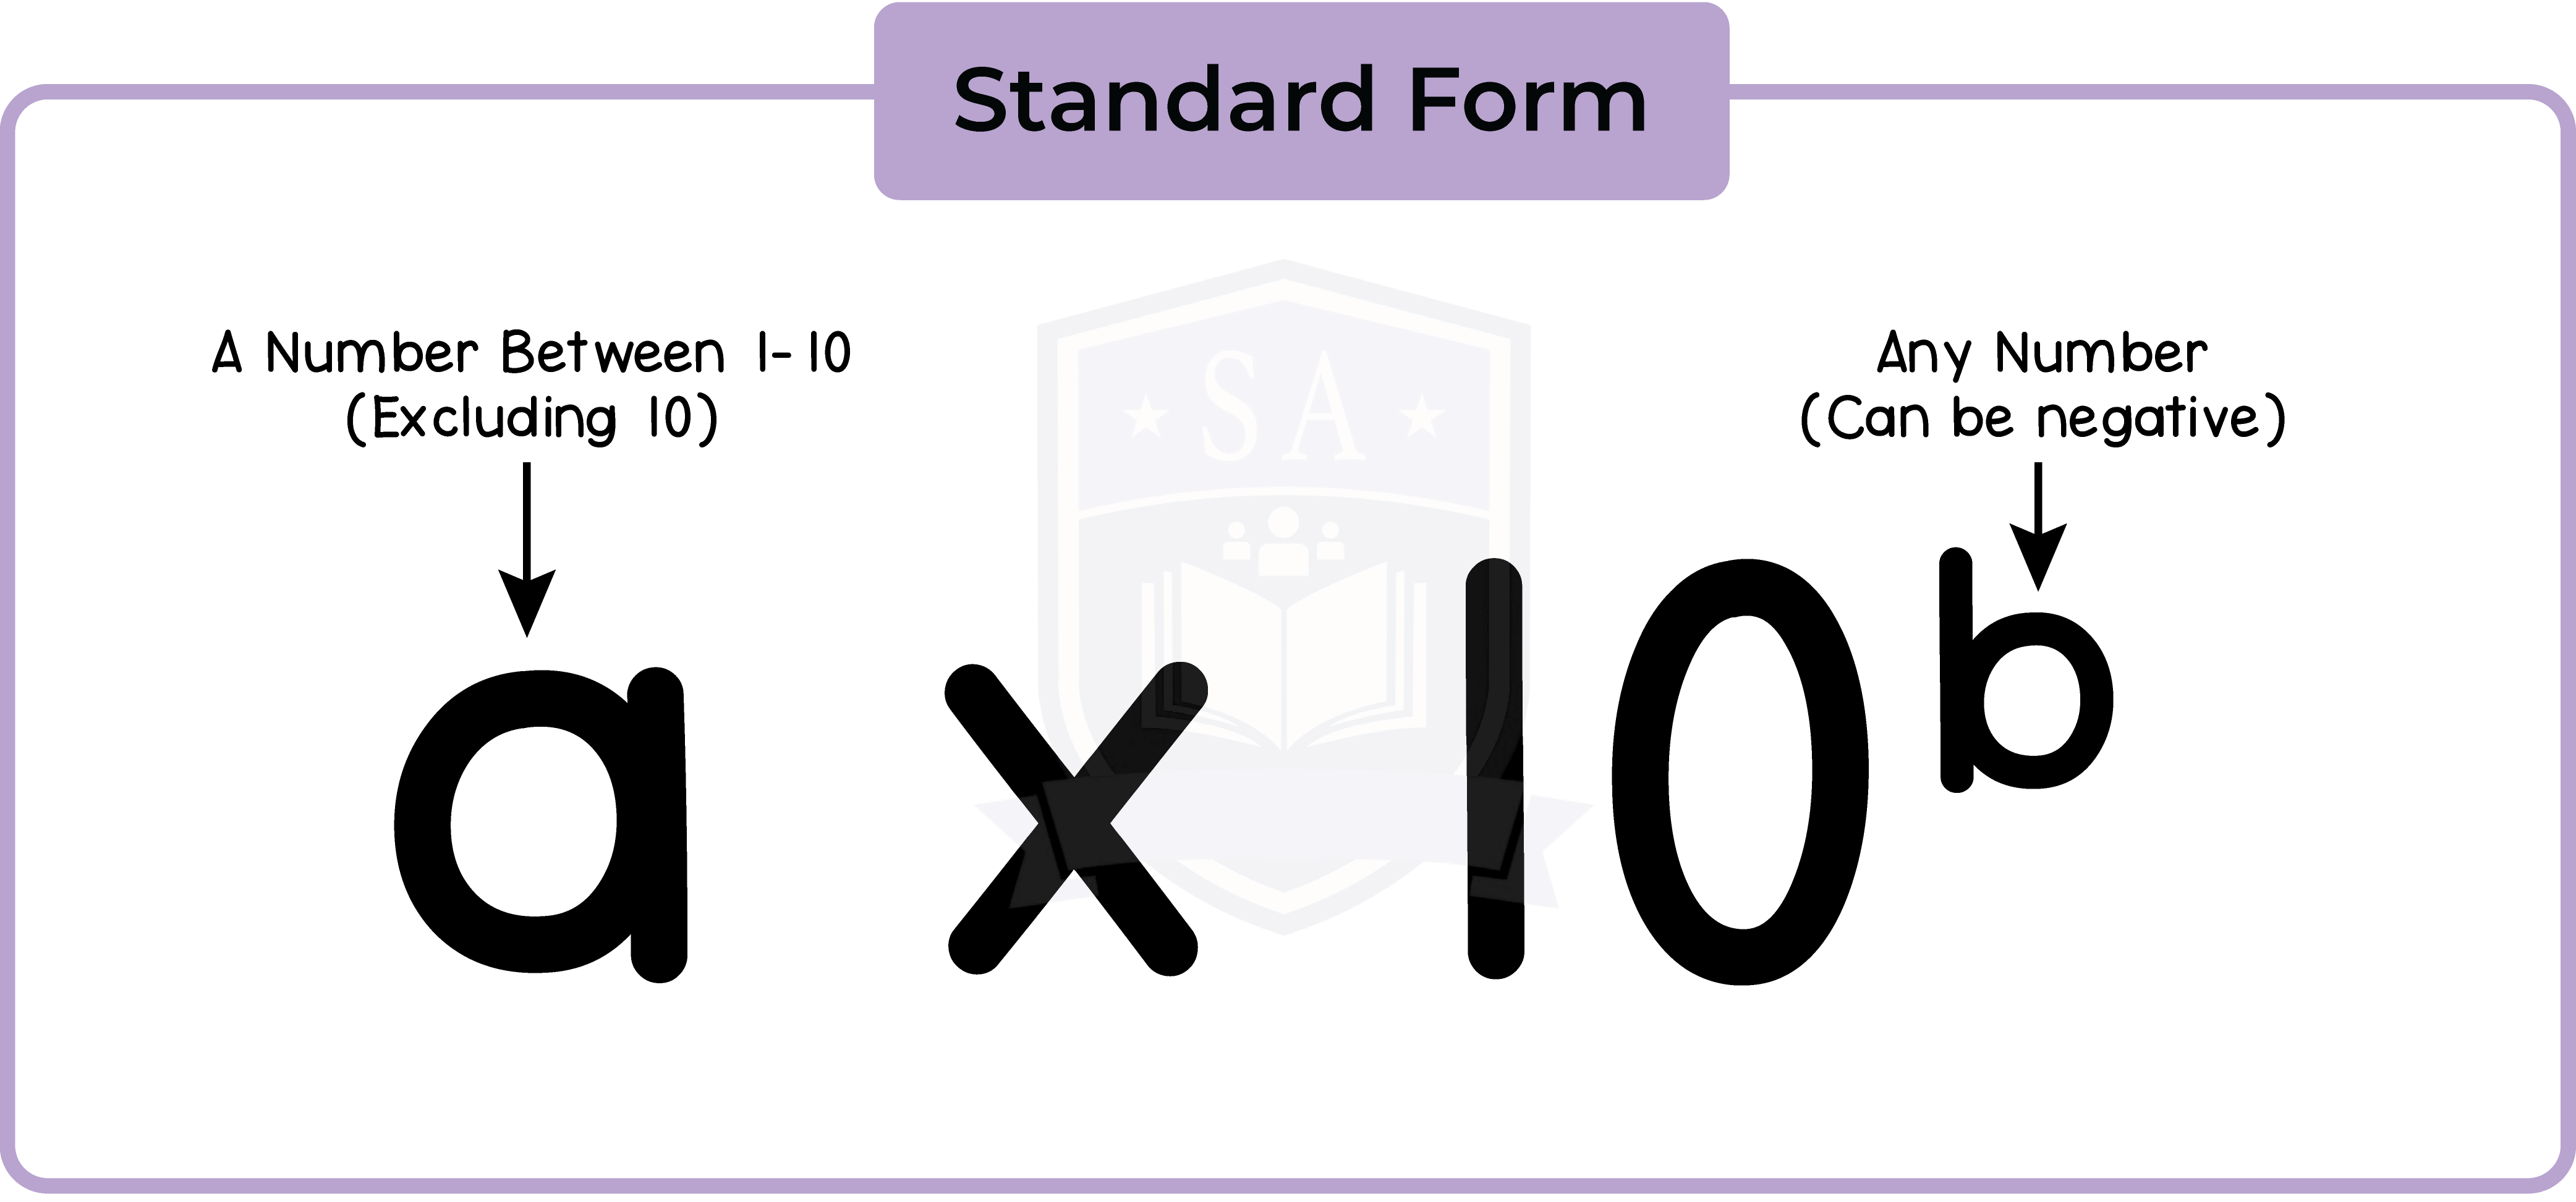 edexcel_igcse_mathematics a_topic 09_standard form_001_introduction to standard form